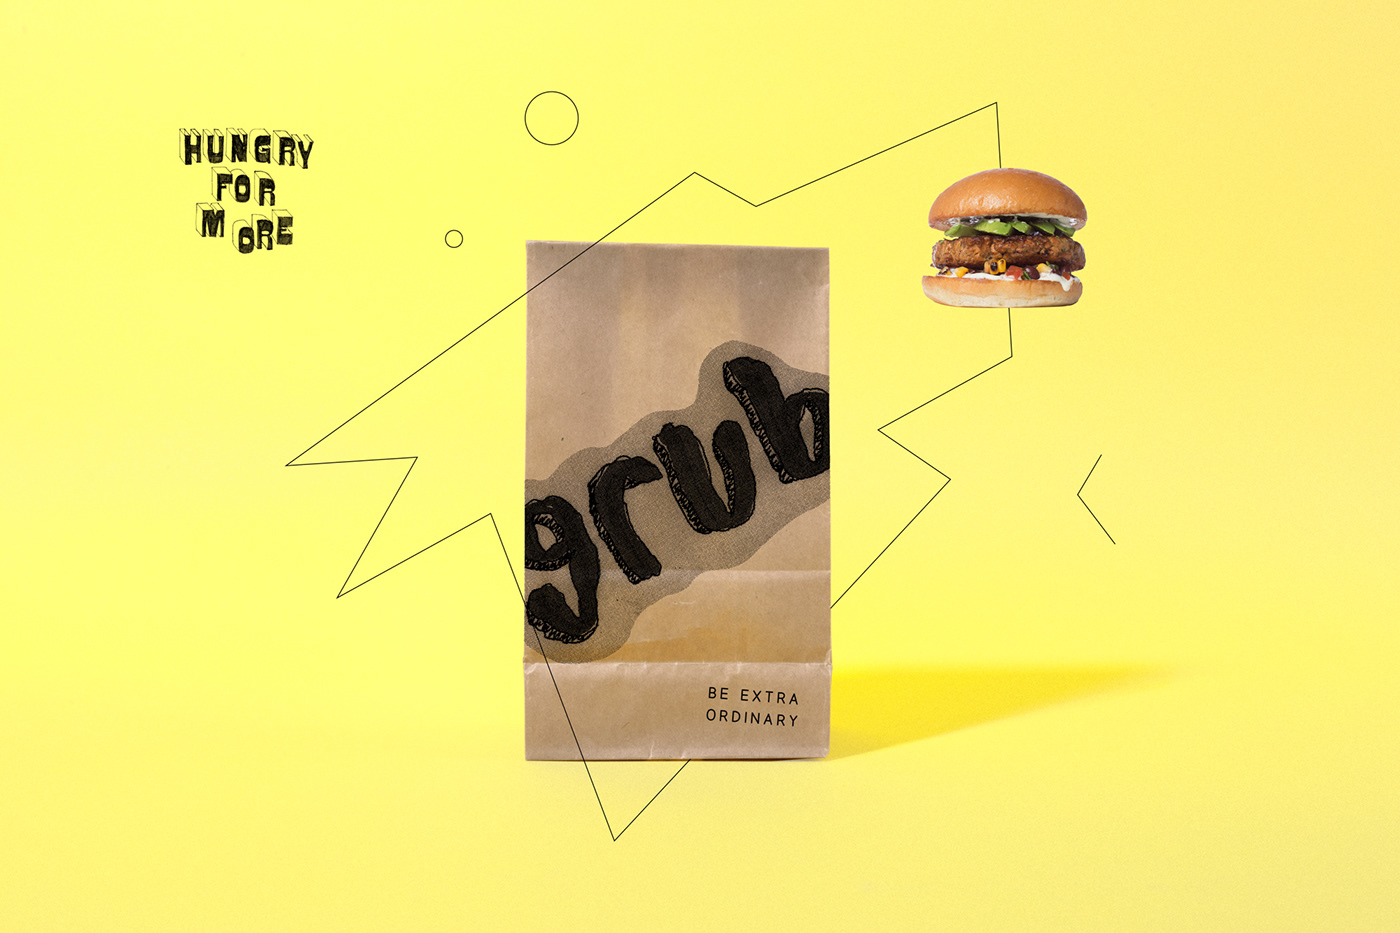 Grub Tractorbeam burger restaurant fast casual ILLUSTRATION  Web Design  flexible branding  identity